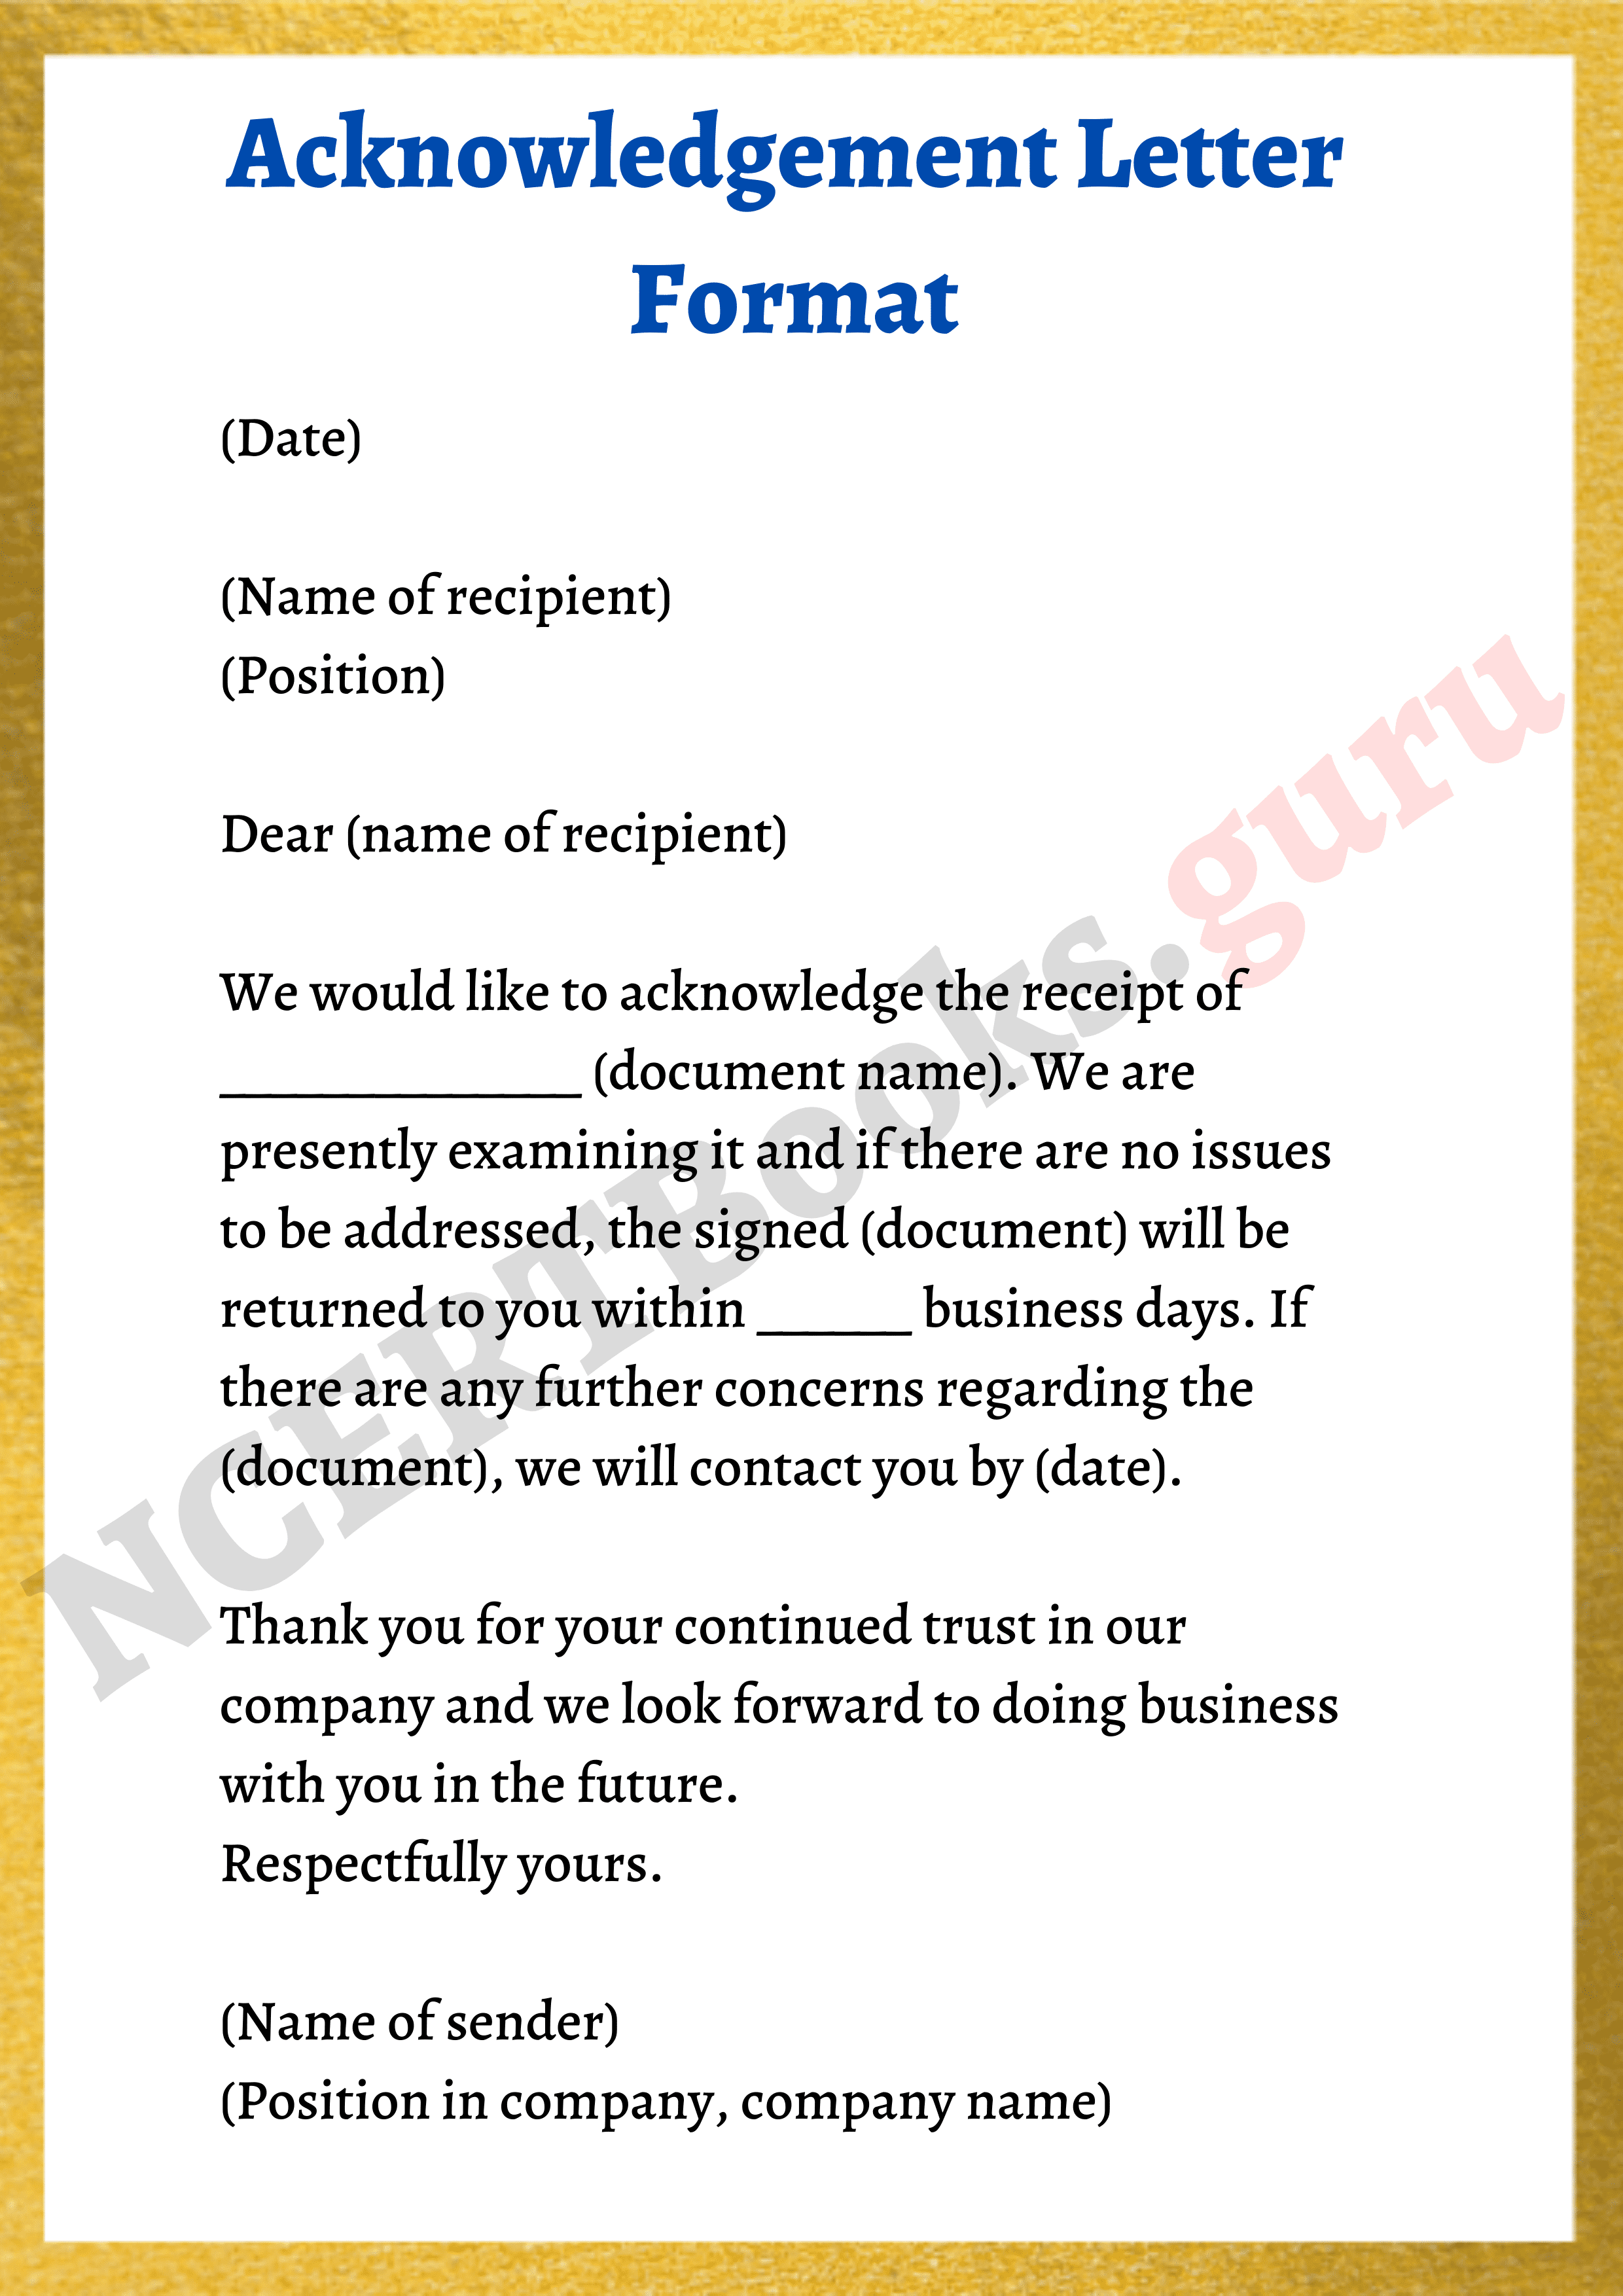 Acknowledgement Letter Format